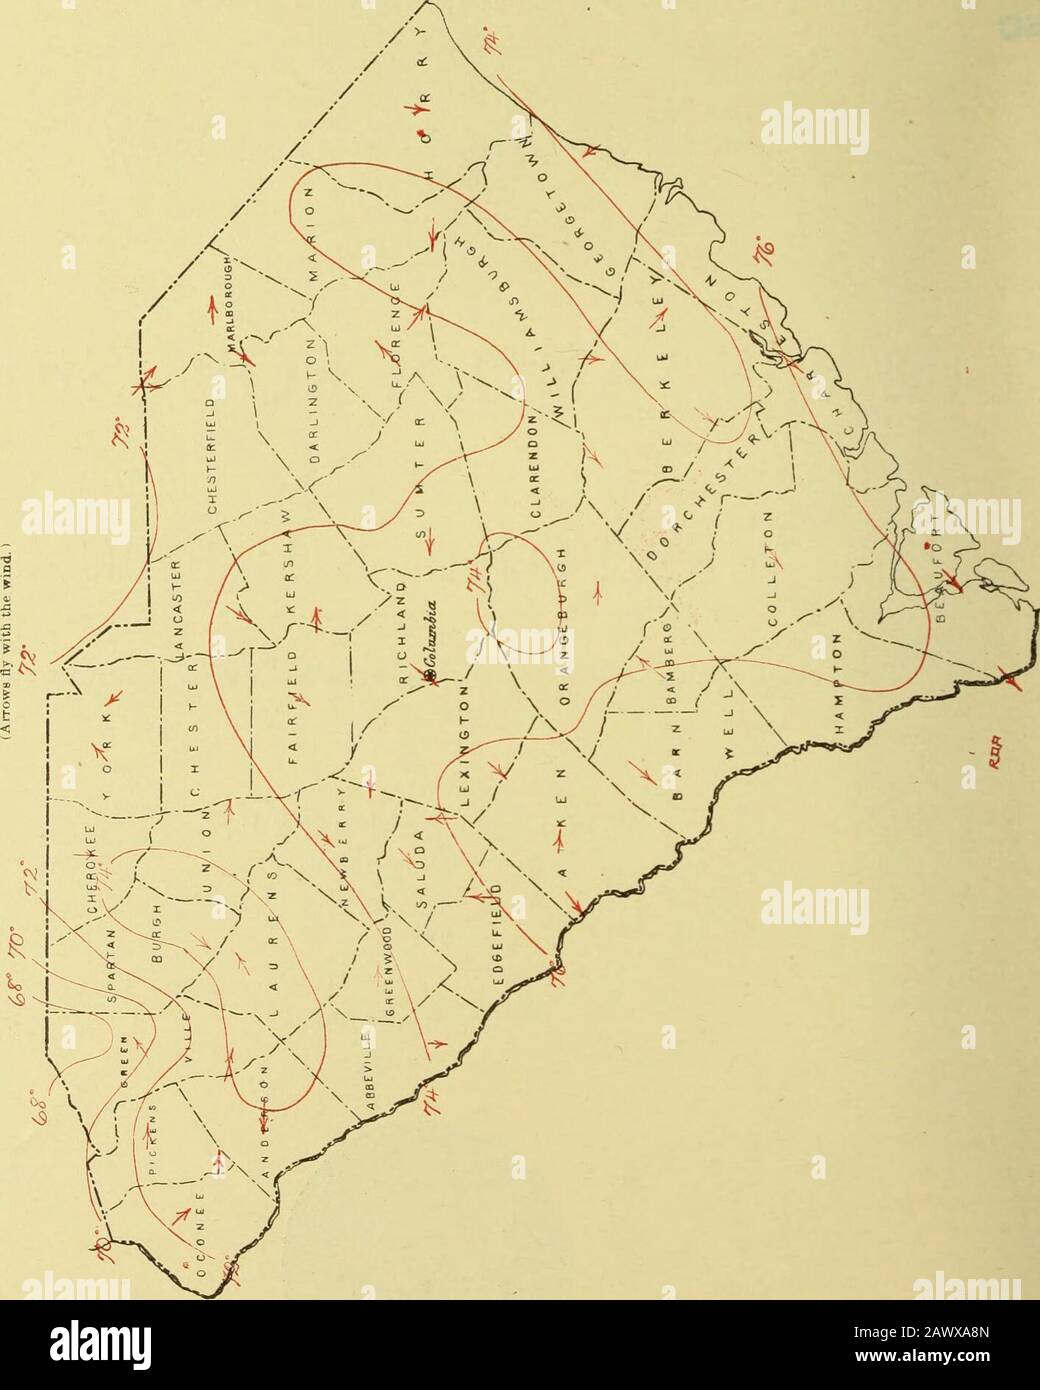 Climatological data, South Carolina . RALEIGH, X. C.WEATHKR BUREAU OFFICE. OlTOBKR ig. 1904. HOh P ci ^ —i Jl-H? w a,p &H H &lt;: HZO. imoA Si:ri IMiiii;, IMiM. (M.IMATK AND C KOIS: SOUTH (^Al{()l&gt;INA SlX^lTON. V. s. i)i;rARiMi;r ov ACKicn/rrKi:. CL1MATI-: AM) CROP Sl-RVICE vi-;tiii;k vki.u. CKNTRAI. OFFICE: WASHINGTON, D. C. SOUTH CRf^Obl^fl SECTION. J. W. BAUEK, Section Director, COLUMBIA, S. C. Vol. VII. Columbia, S. C, Septembeb, 1904. No. 9. PROGRESS OF -pARM WORK. While tlie closing dates of September, 1904, had midsum-mer heat, and were the warmest on record for those dates in Stock Photo